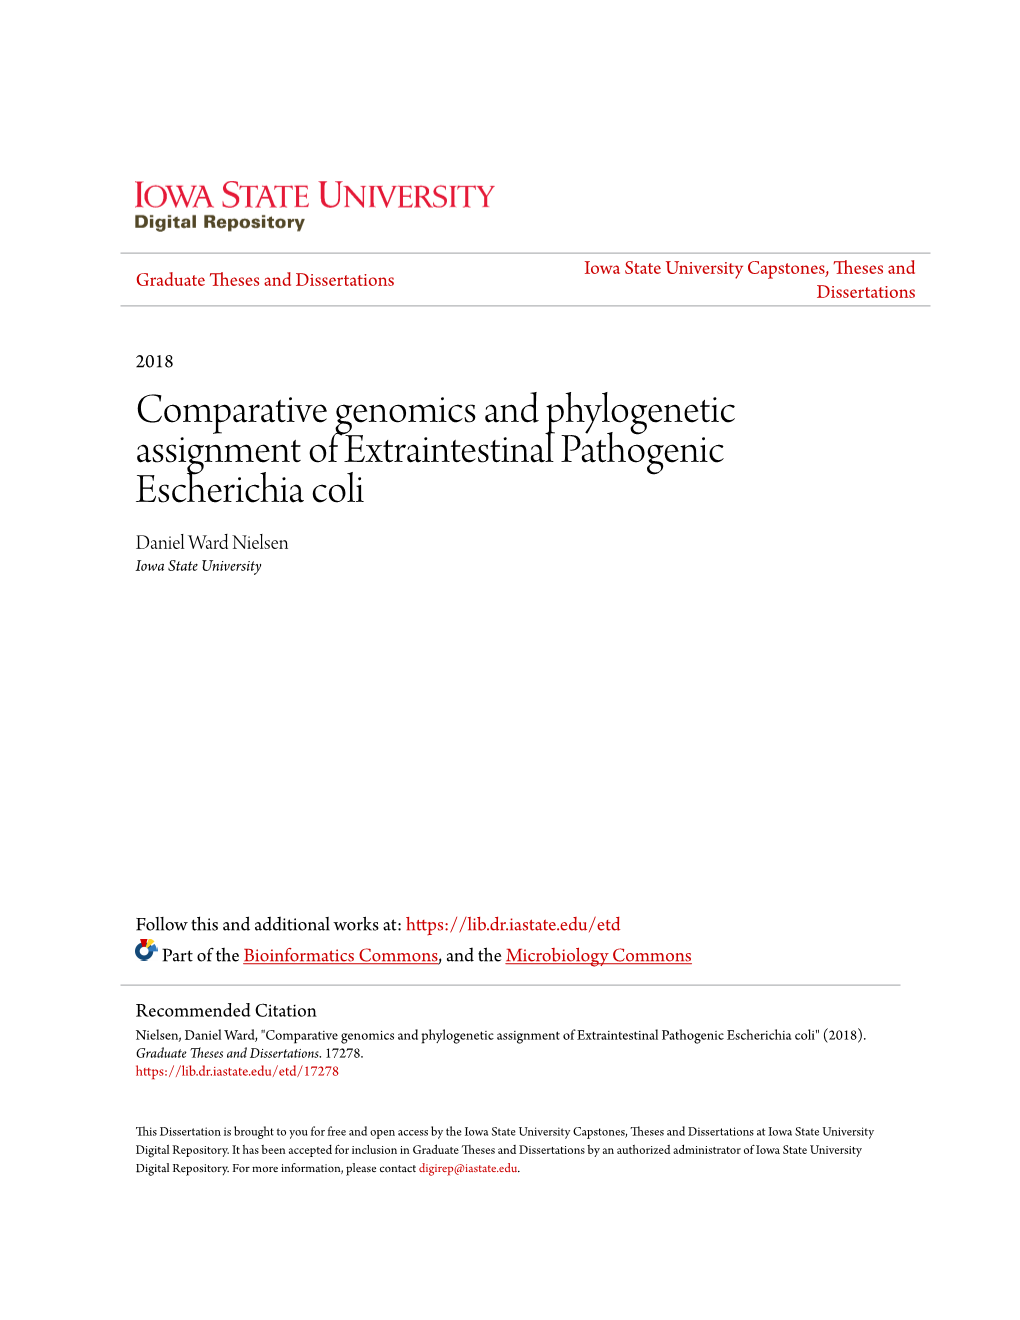 Comparative Genomics and Phylogenetic Assignment of Extraintestinal Pathogenic Escherichia Coli Daniel Ward Nielsen Iowa State University